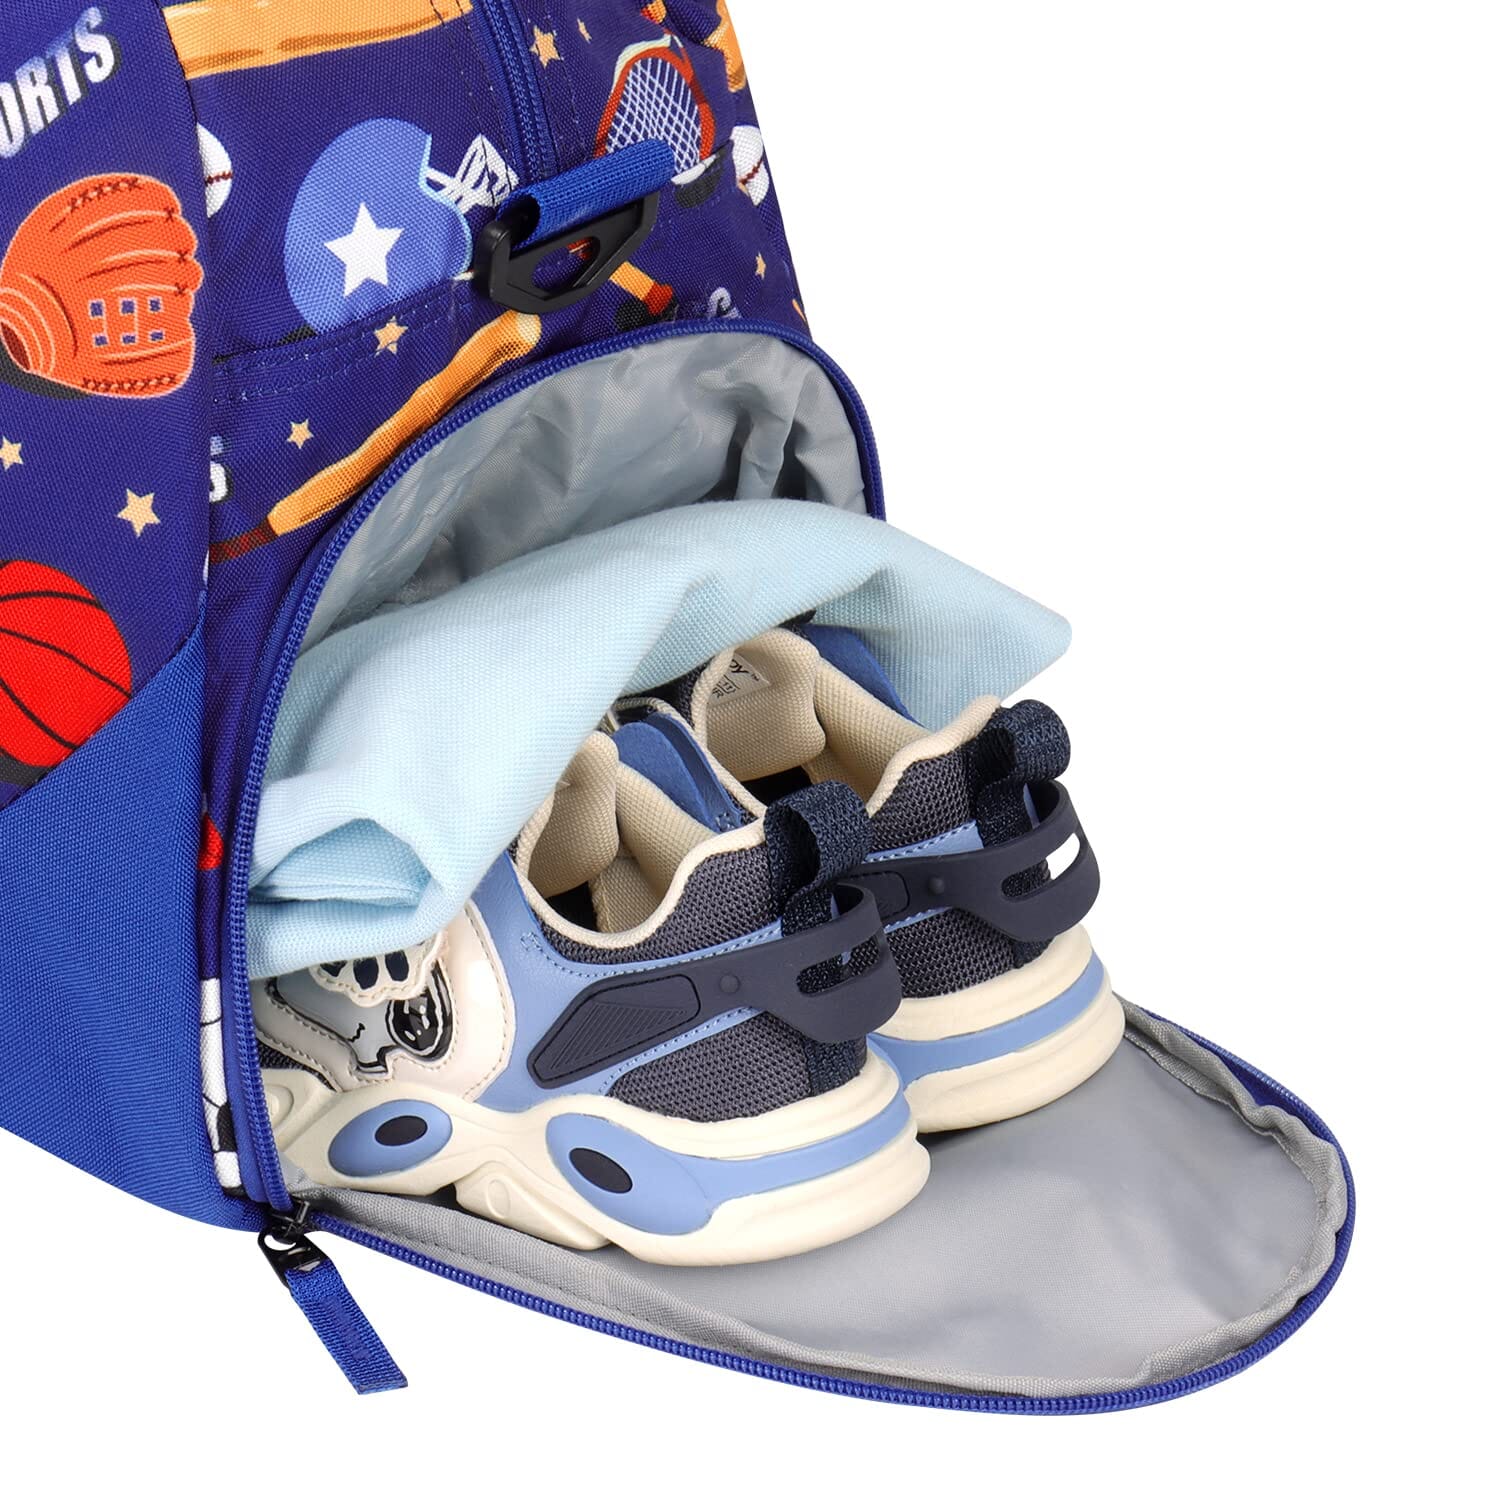 Choco Mocha Kids Baseball Duffle Bag for Boys, Blue Weekend Bag for Kids 20.08*9.06*10.63 inches chocomochakids 